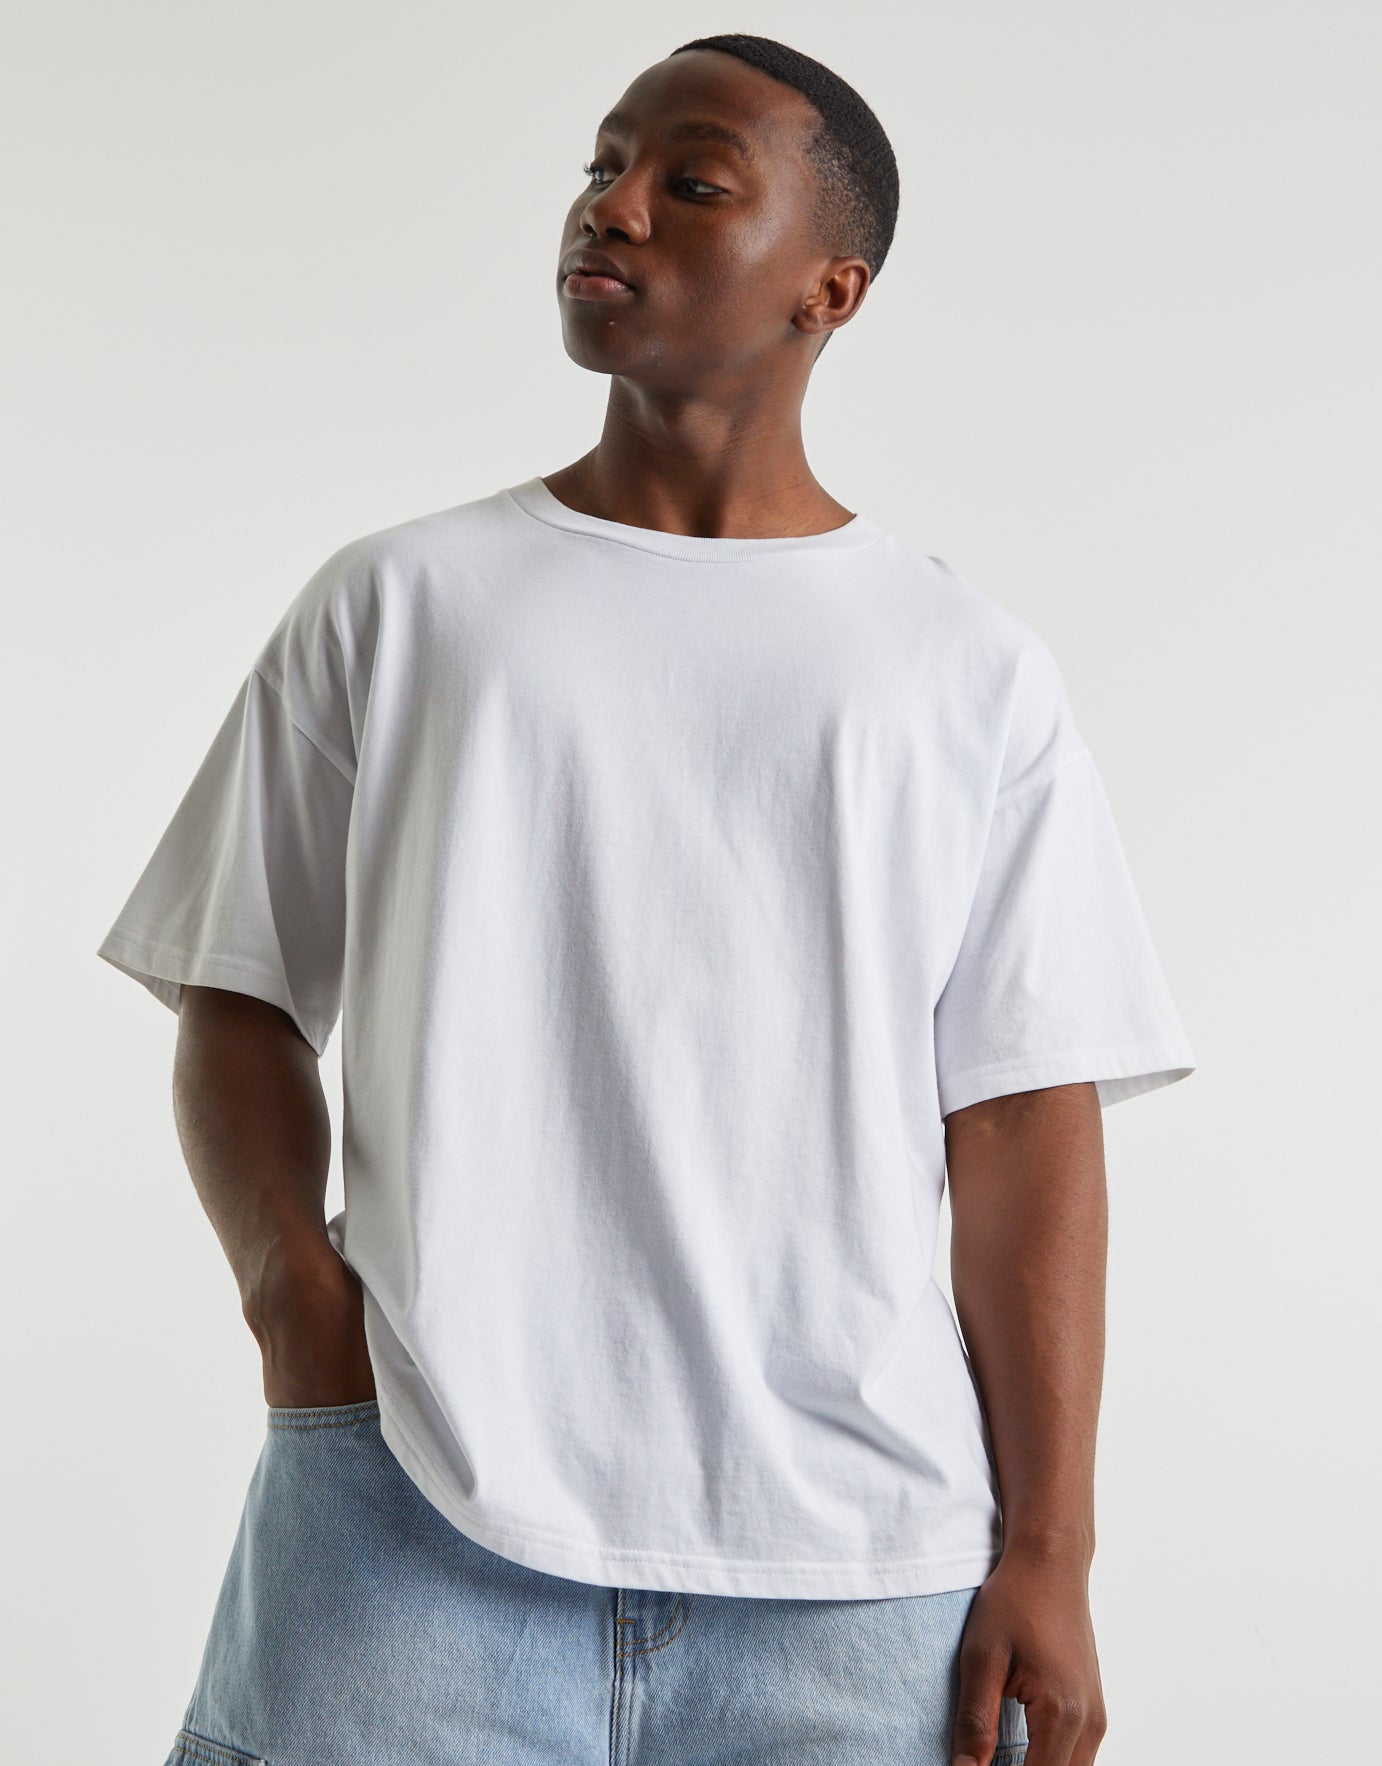 Plain t-shirts